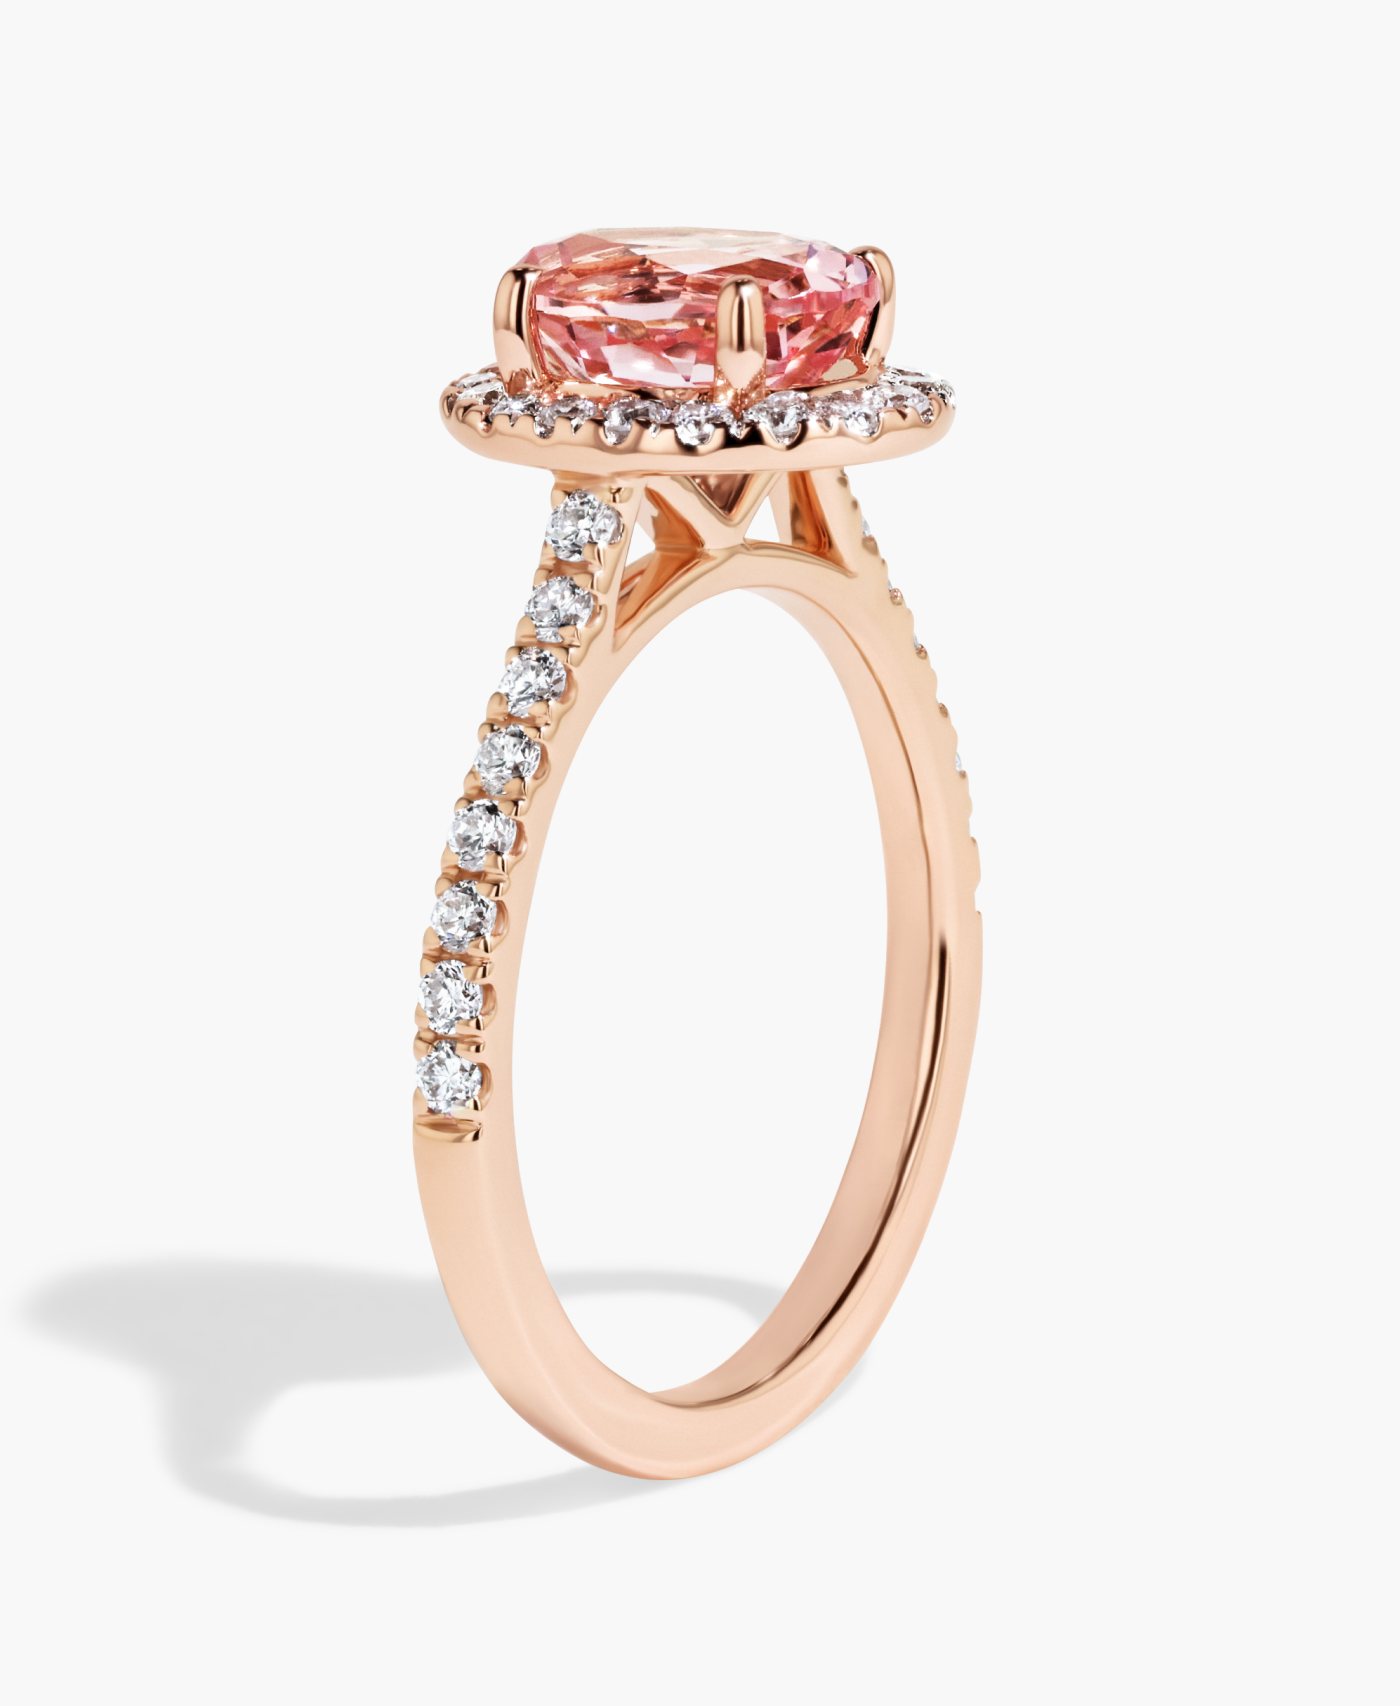 Custom designed engagement ring and wedding bands